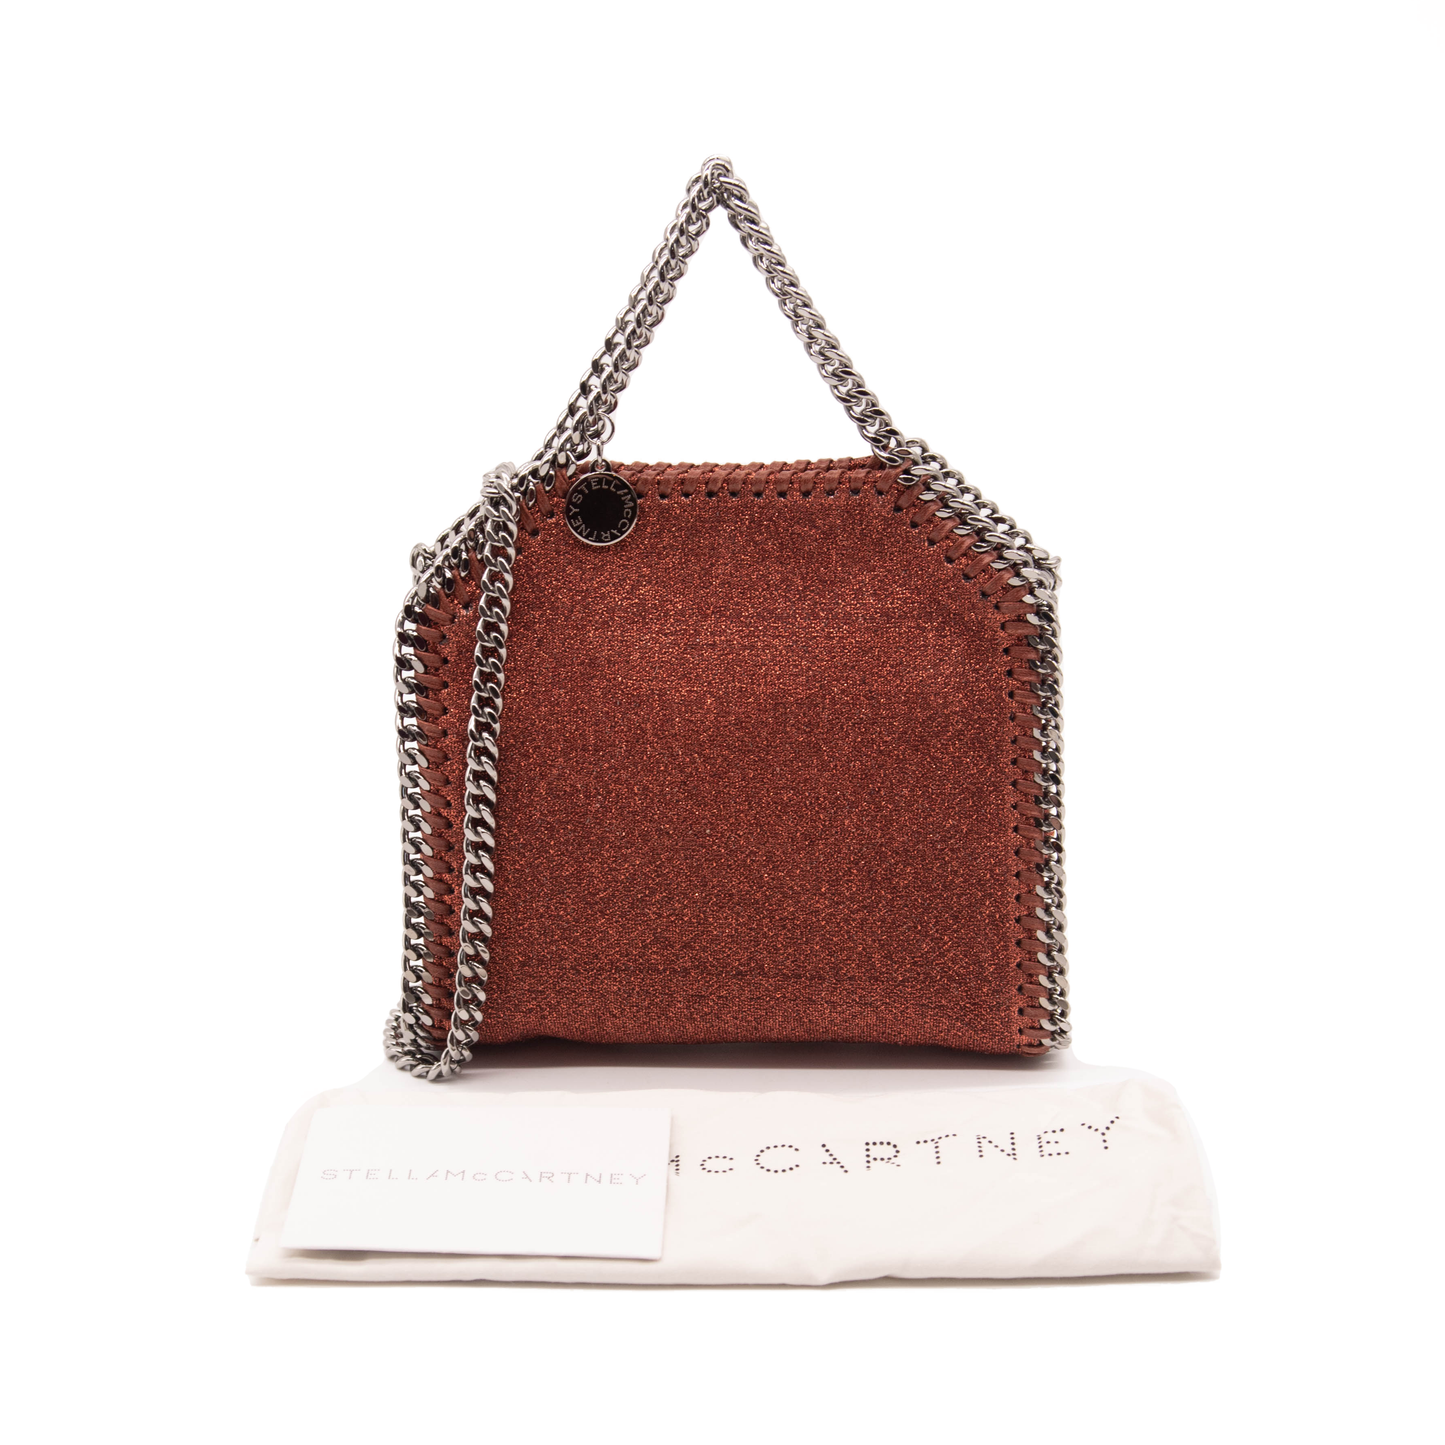 NEW $900 Stella McCartney Tiny Falabella Metallic Red Lurex Cross Body Bag